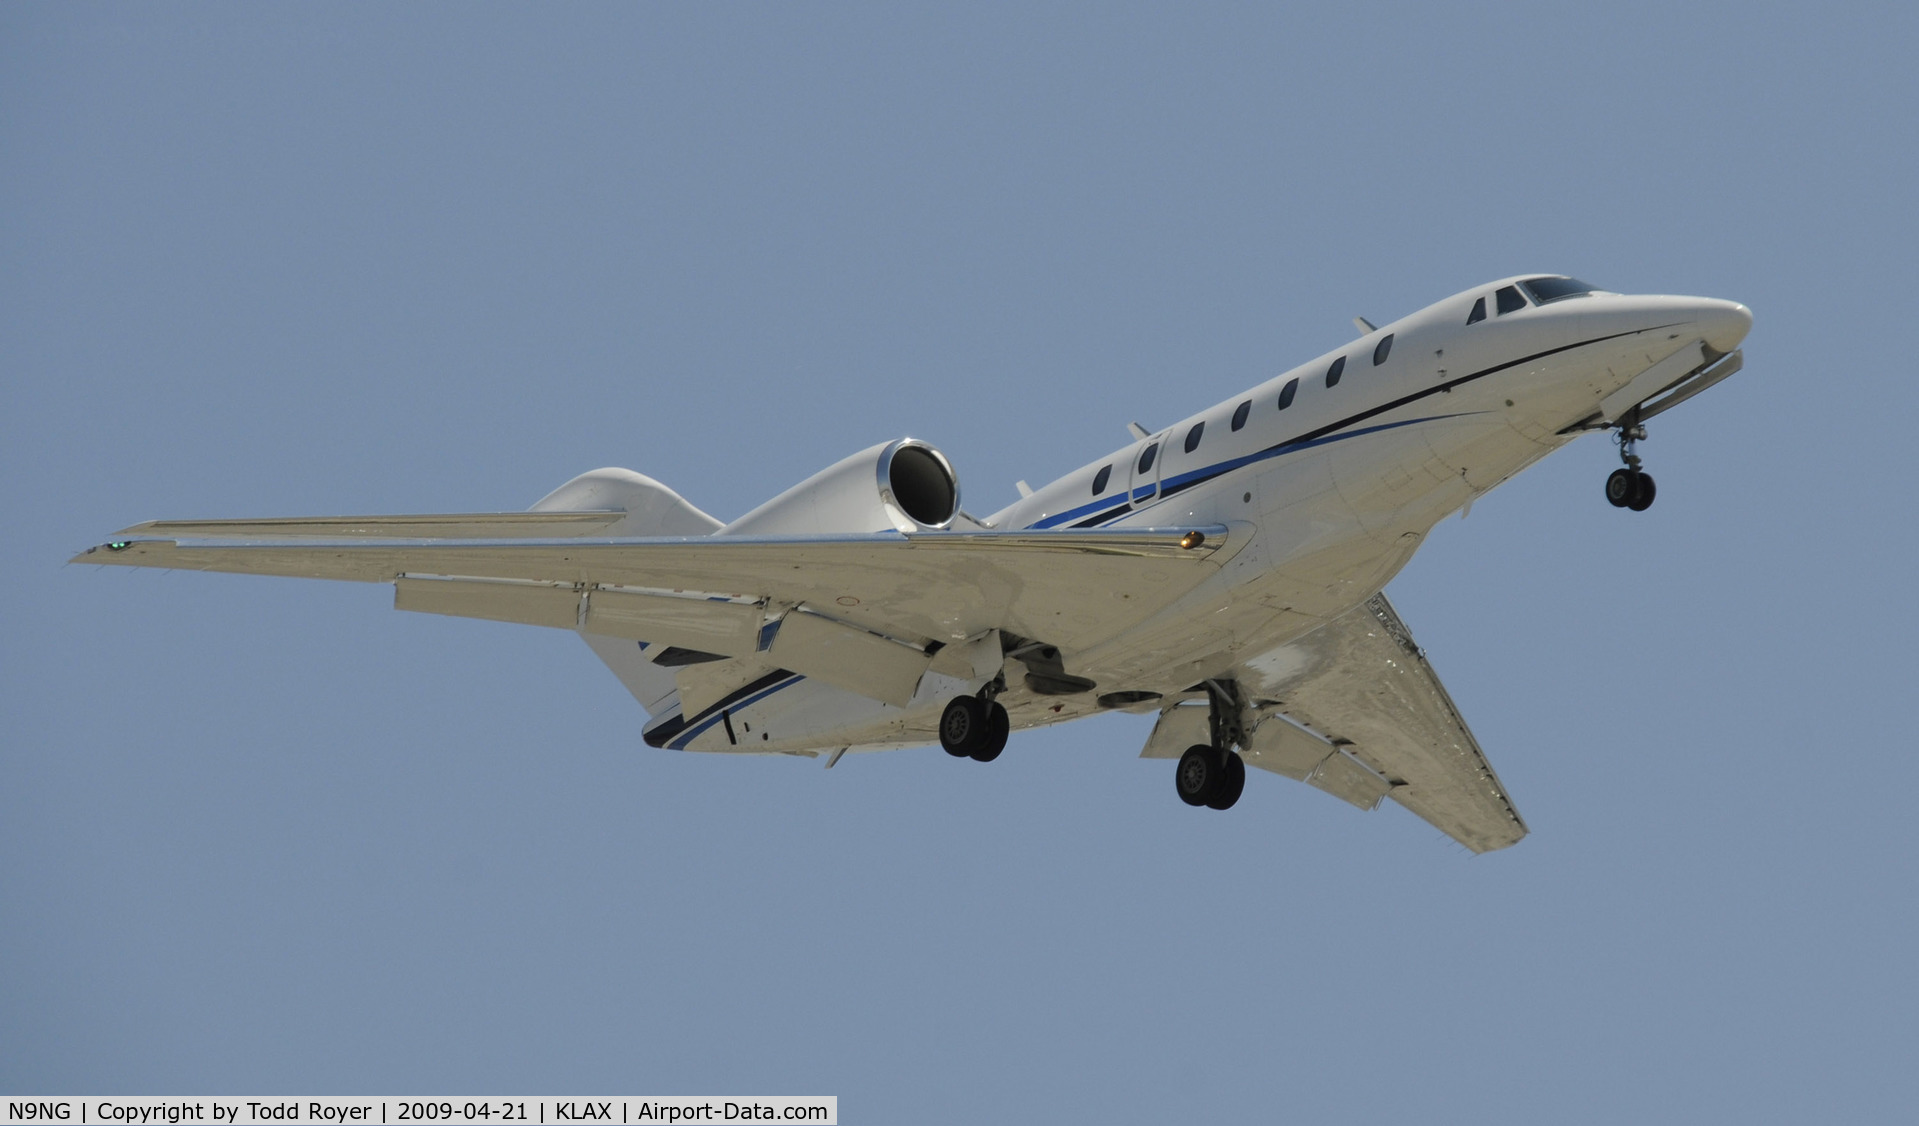 N9NG, 2003 Cessna 750 Citation X Citation X C/N 750-0213, Landing 24R at LAX